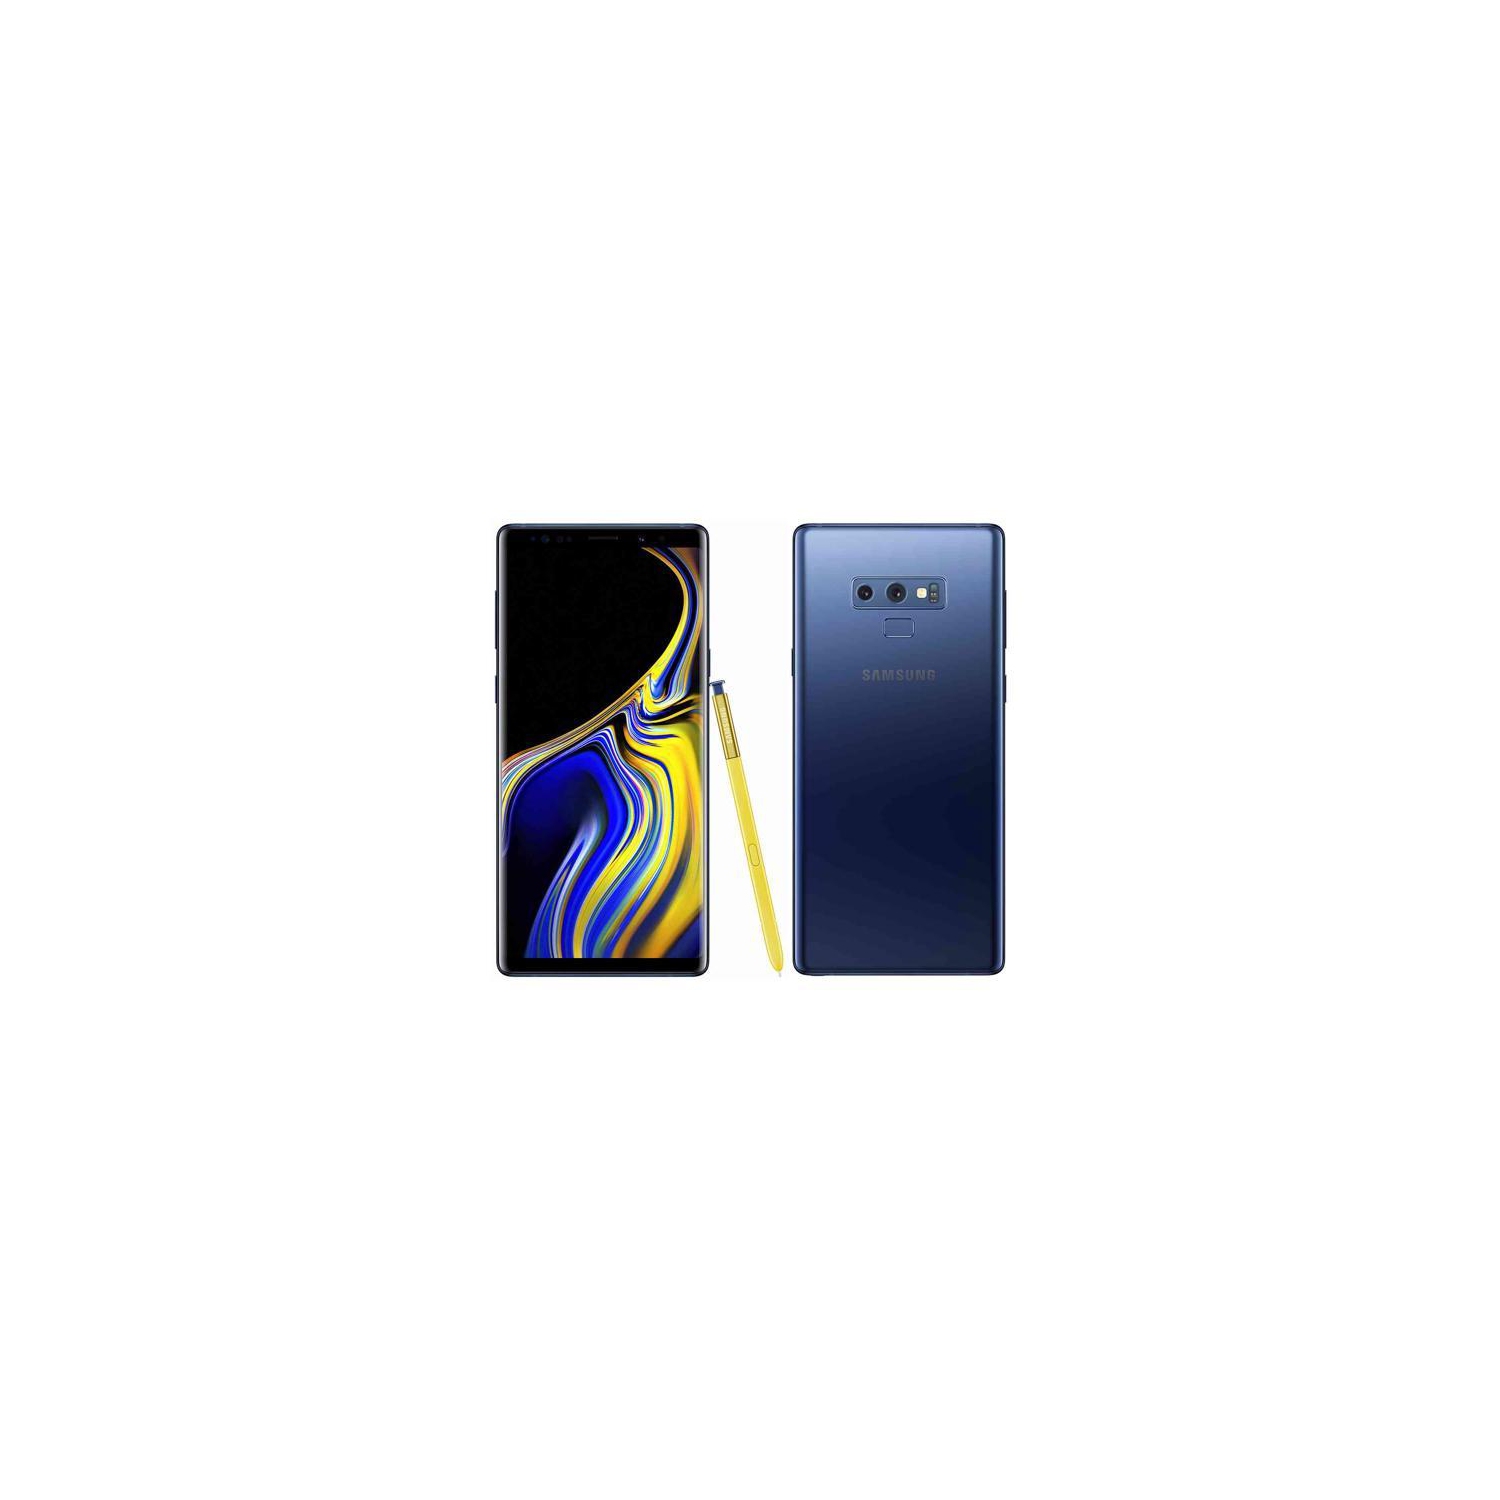 Refurbished (Excellent) - Samsung Galaxy Note 9 128GB Smartphone - Blue - Unlocked